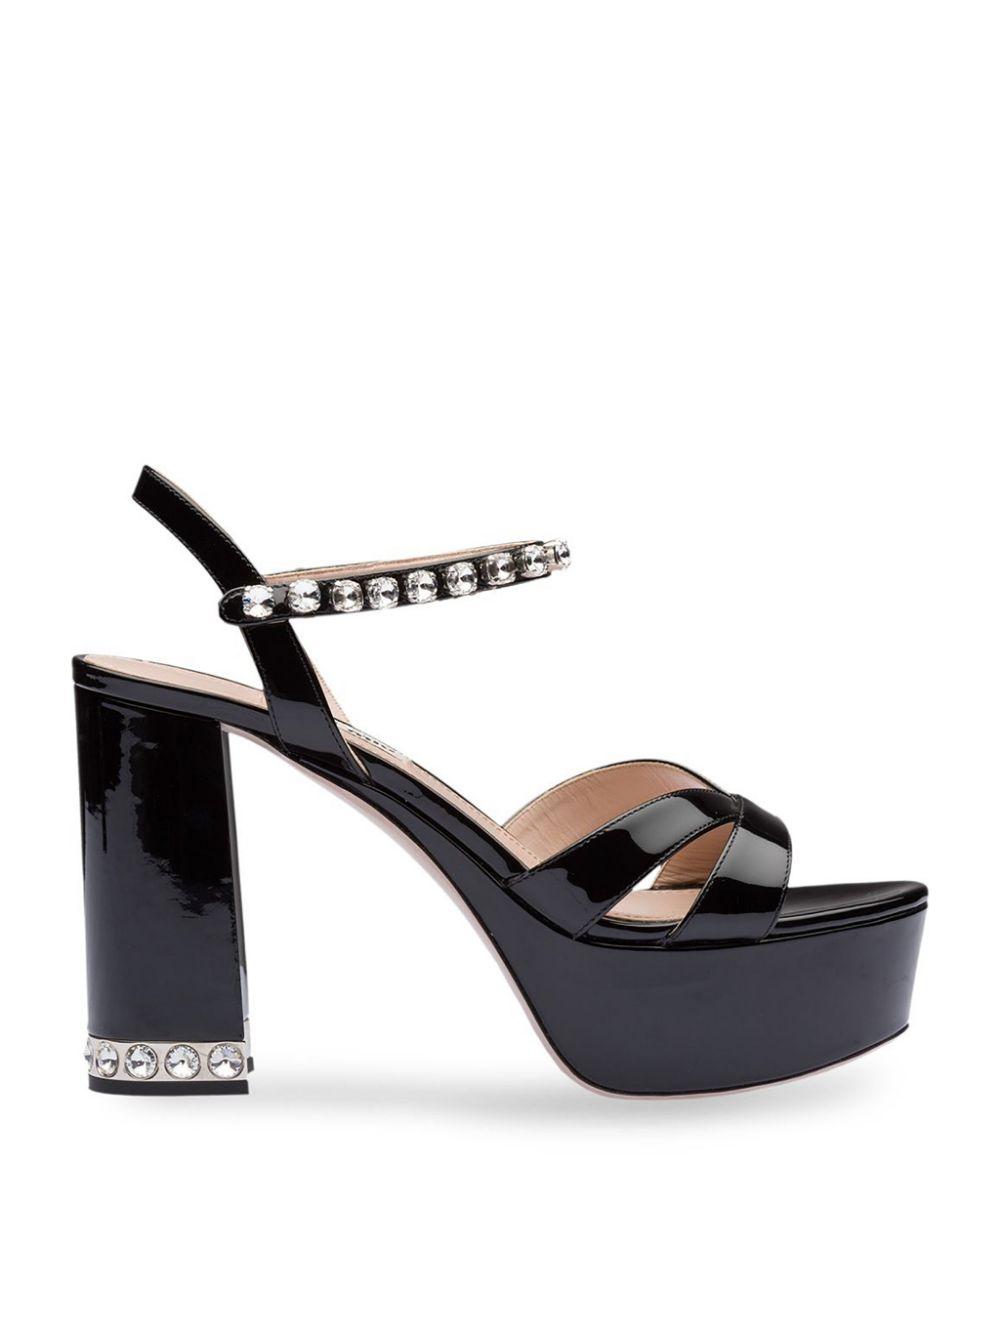 Miu Miu Crystal Embellished Platform Sandals in Black | Lyst